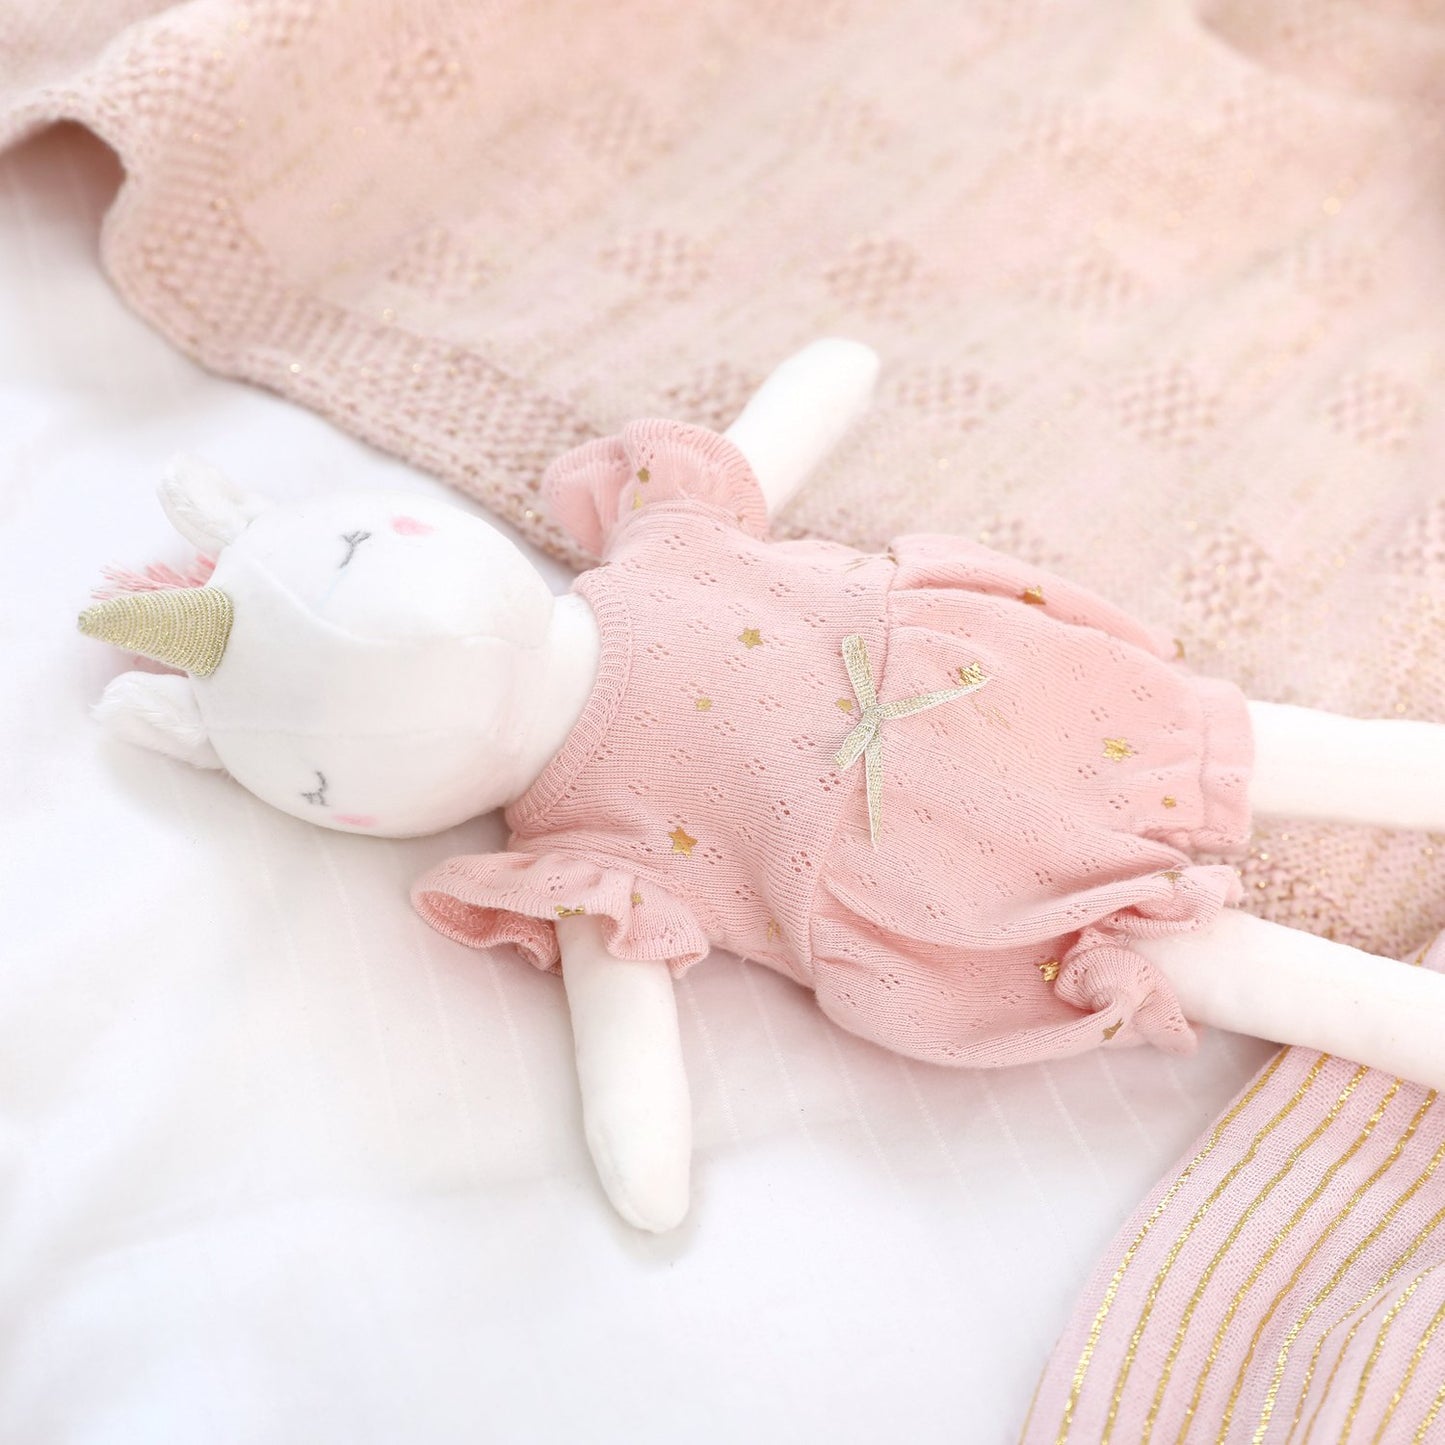 Cotton Velvet Doll by Albetta | Sparkle Unicorn